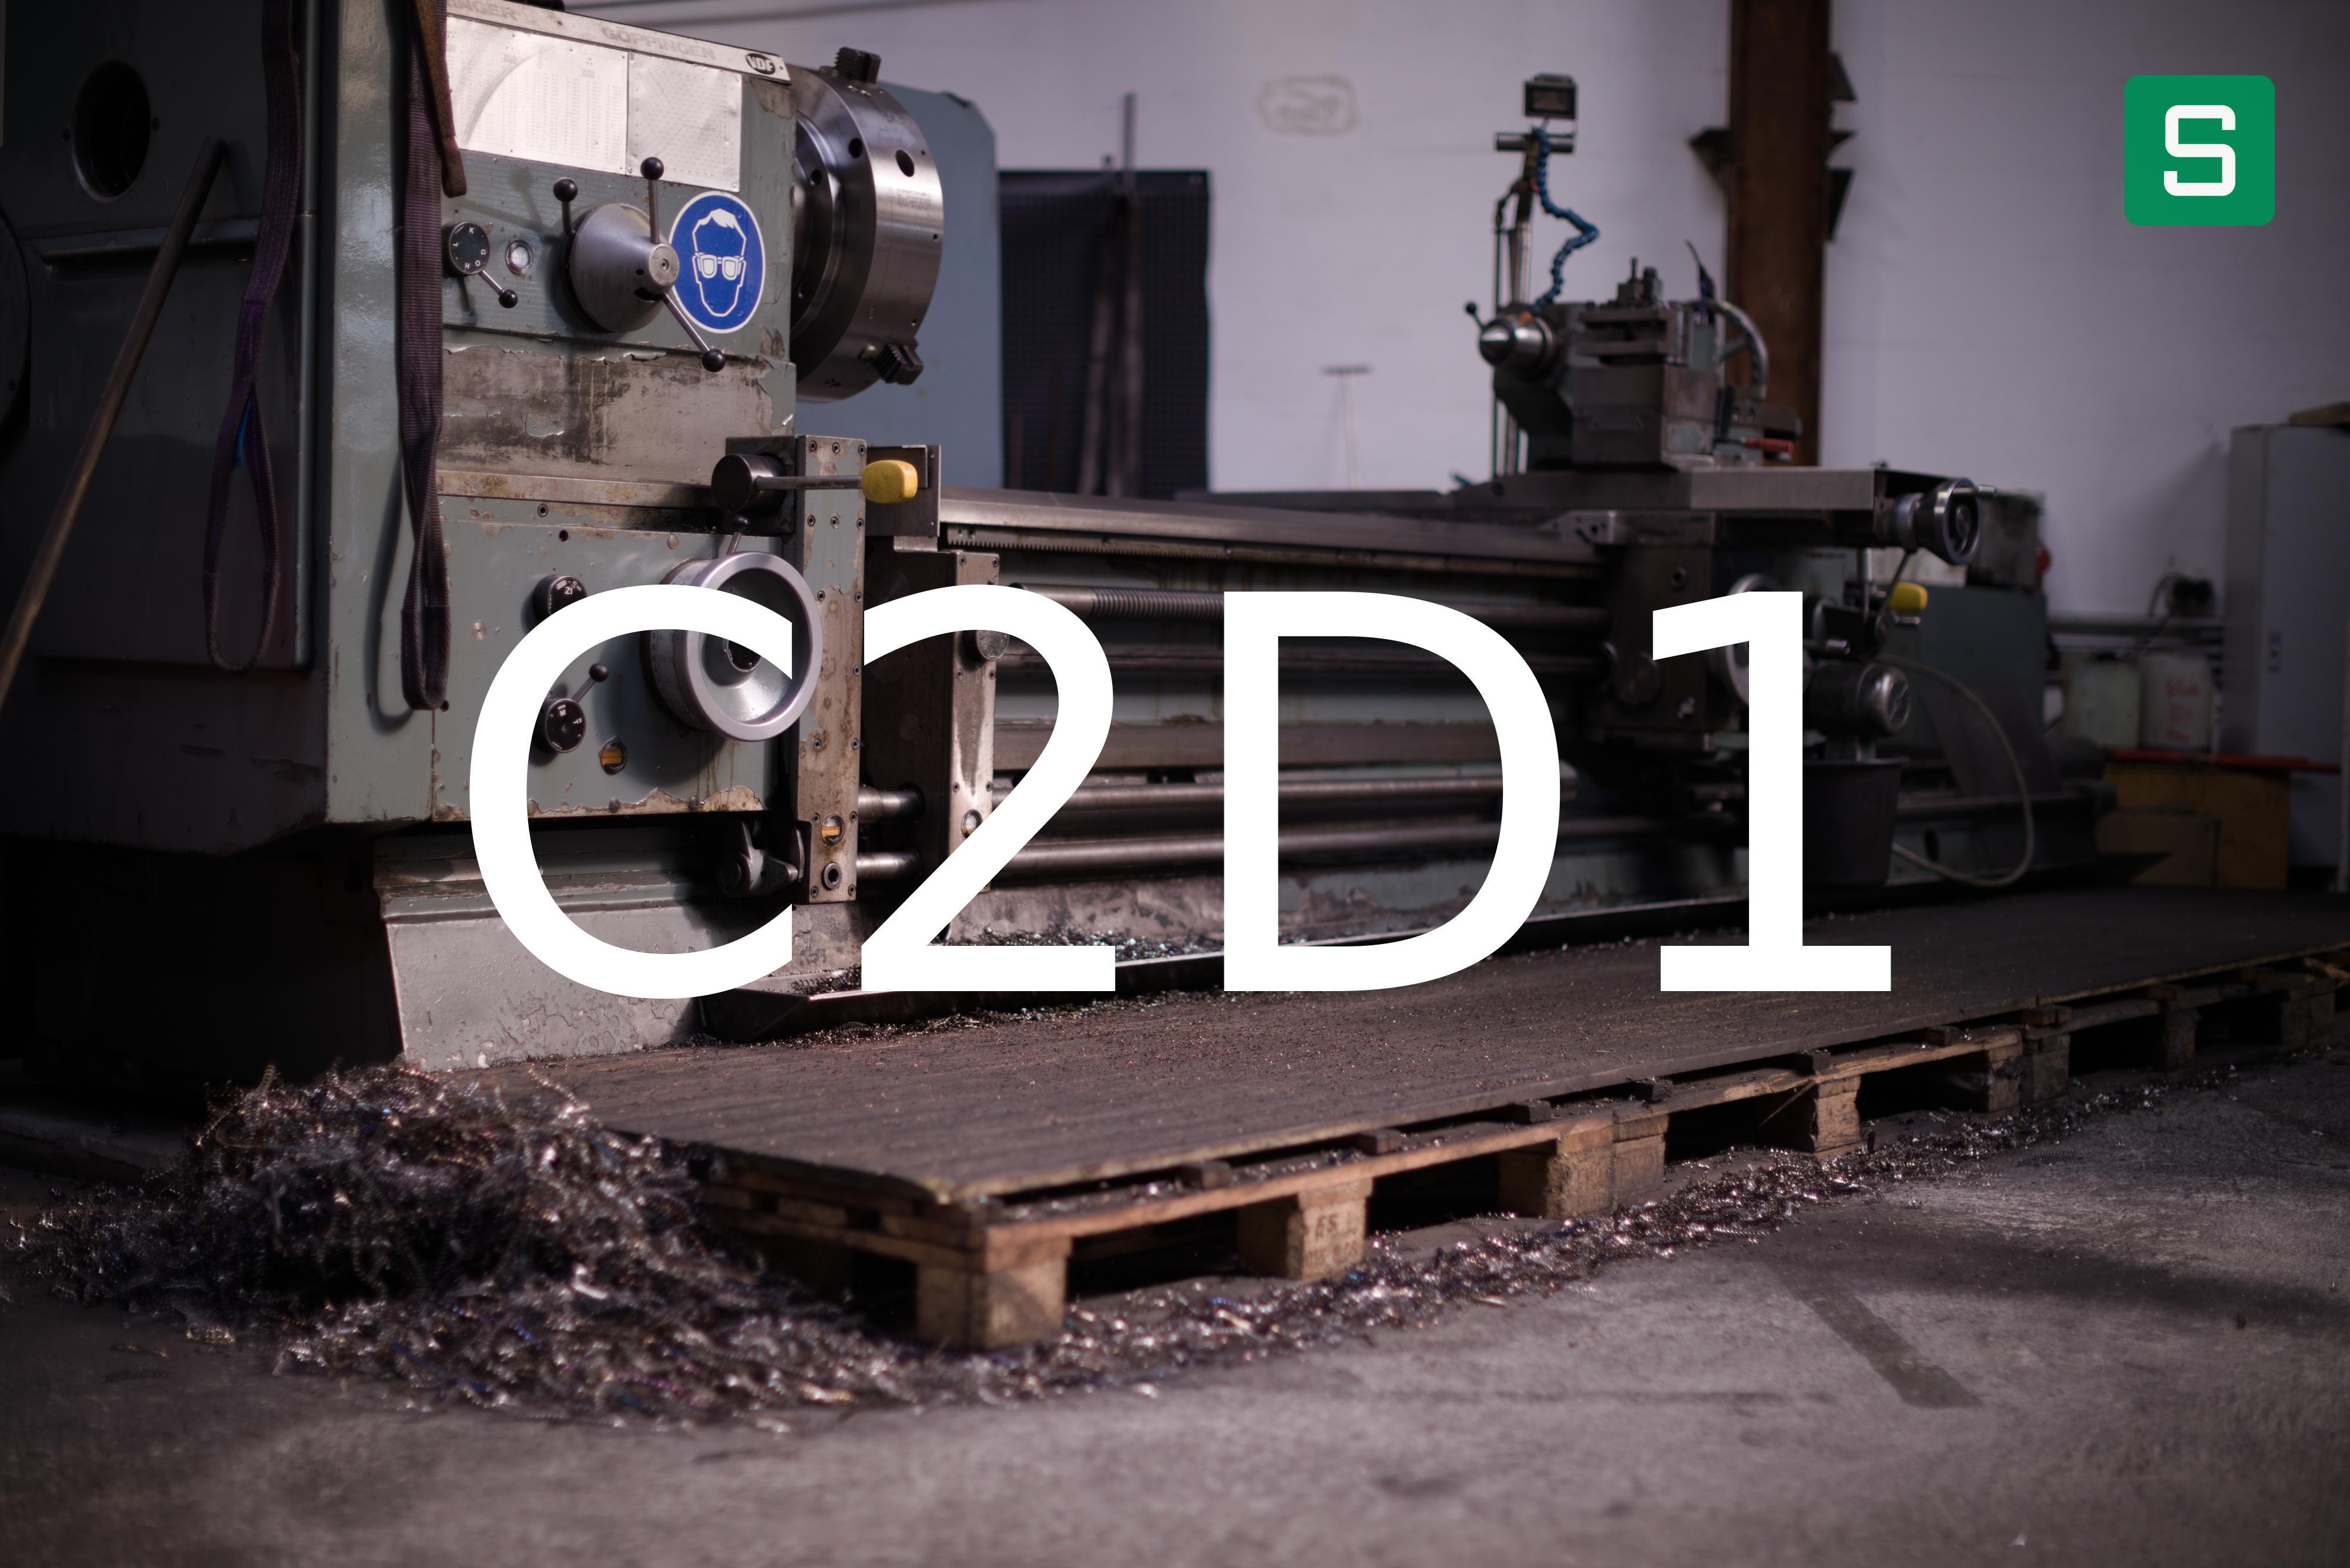 Steel Material: C2D1